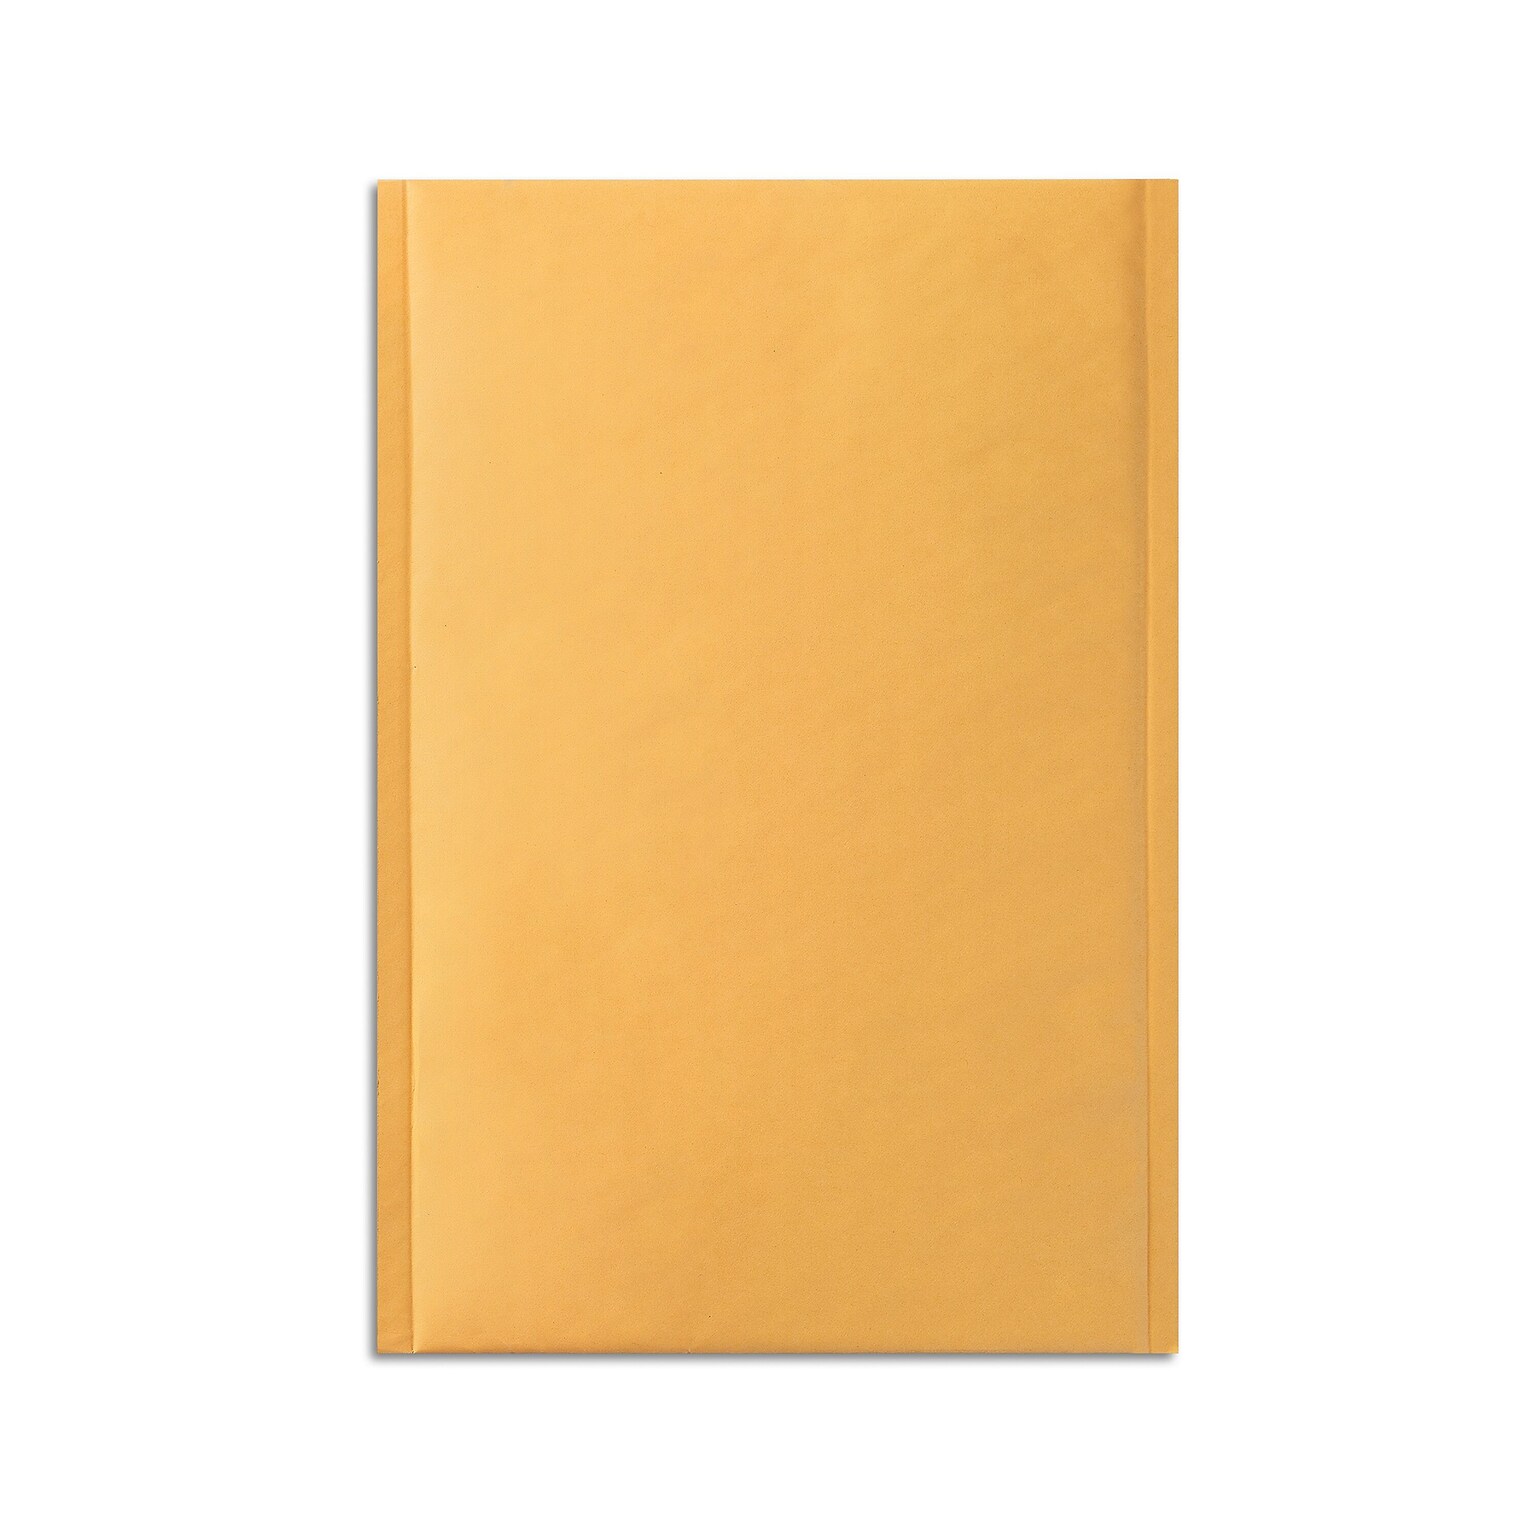 8.5W x 11L Peel & Seal Bubble Mailer, #2, 12/Pack (51580-CC)